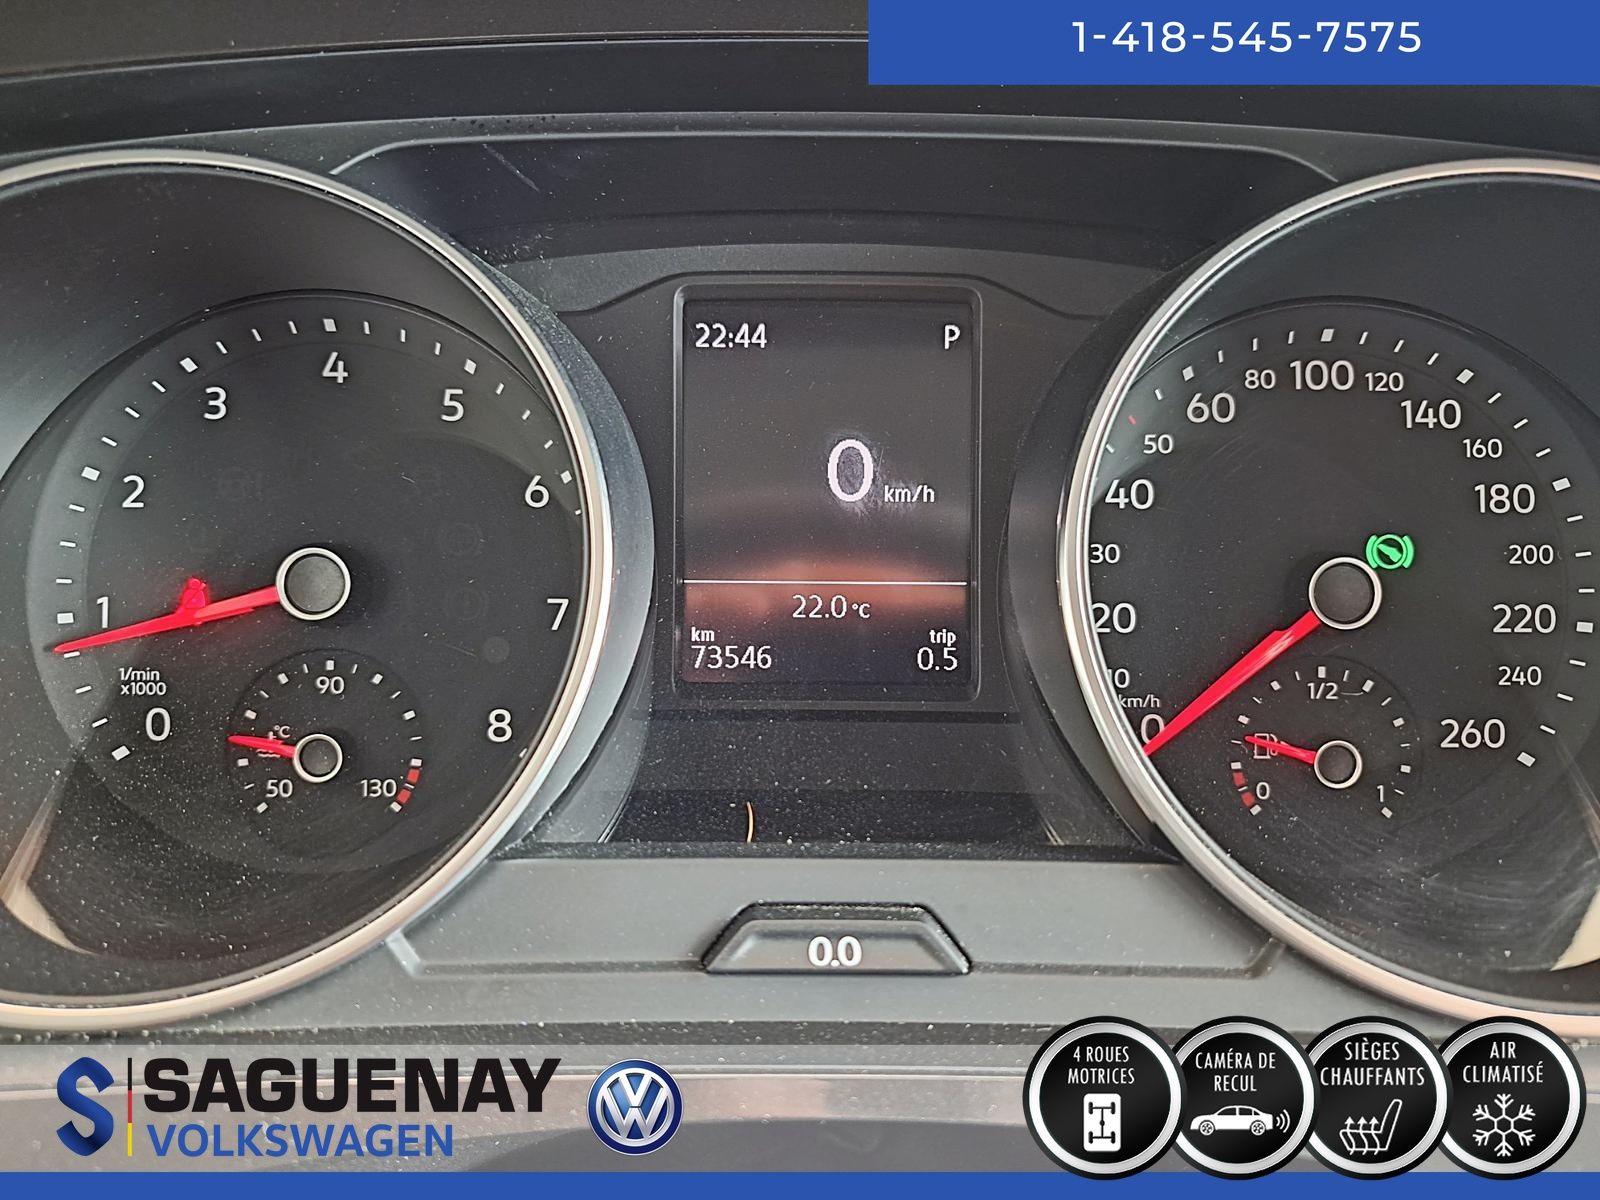 Volkswagen Tiguan Trendline 4 MOTION  (95$/Sem)* 2019 STOCK : GS269A